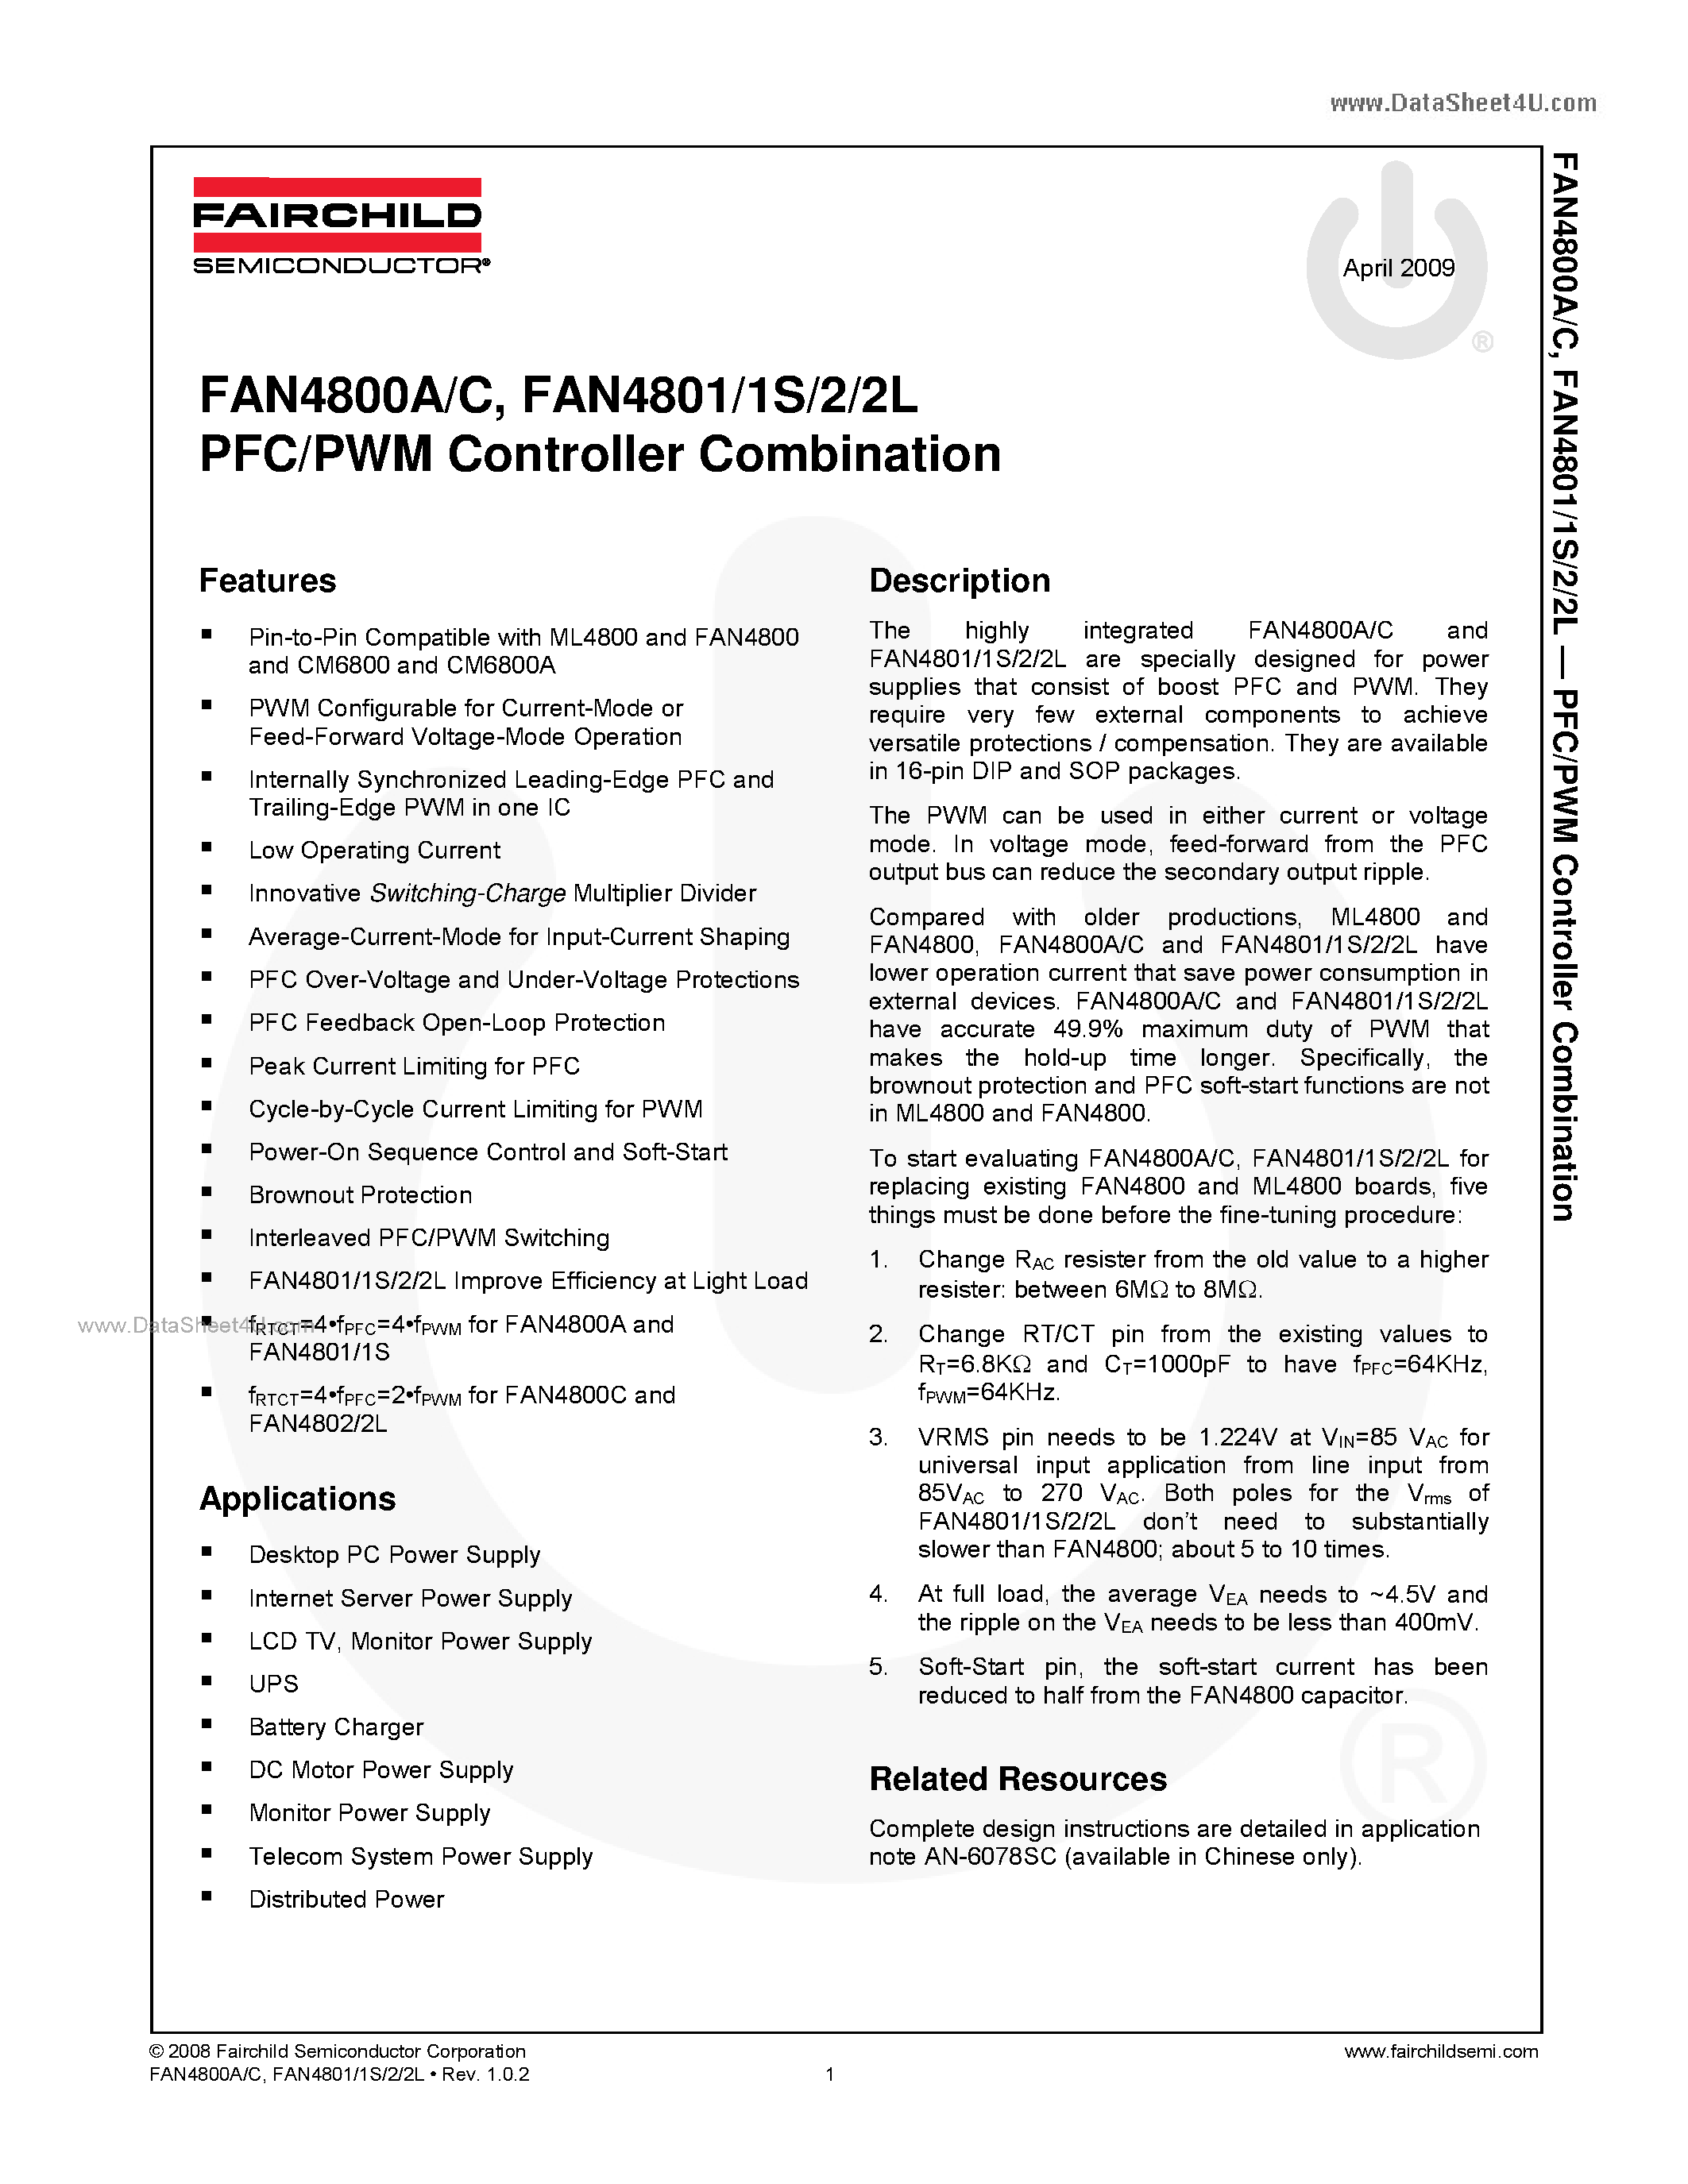 Даташит FAN4800A - (FAN4800x / FAN480xx) PFC/PWM Controller Combination страница 1